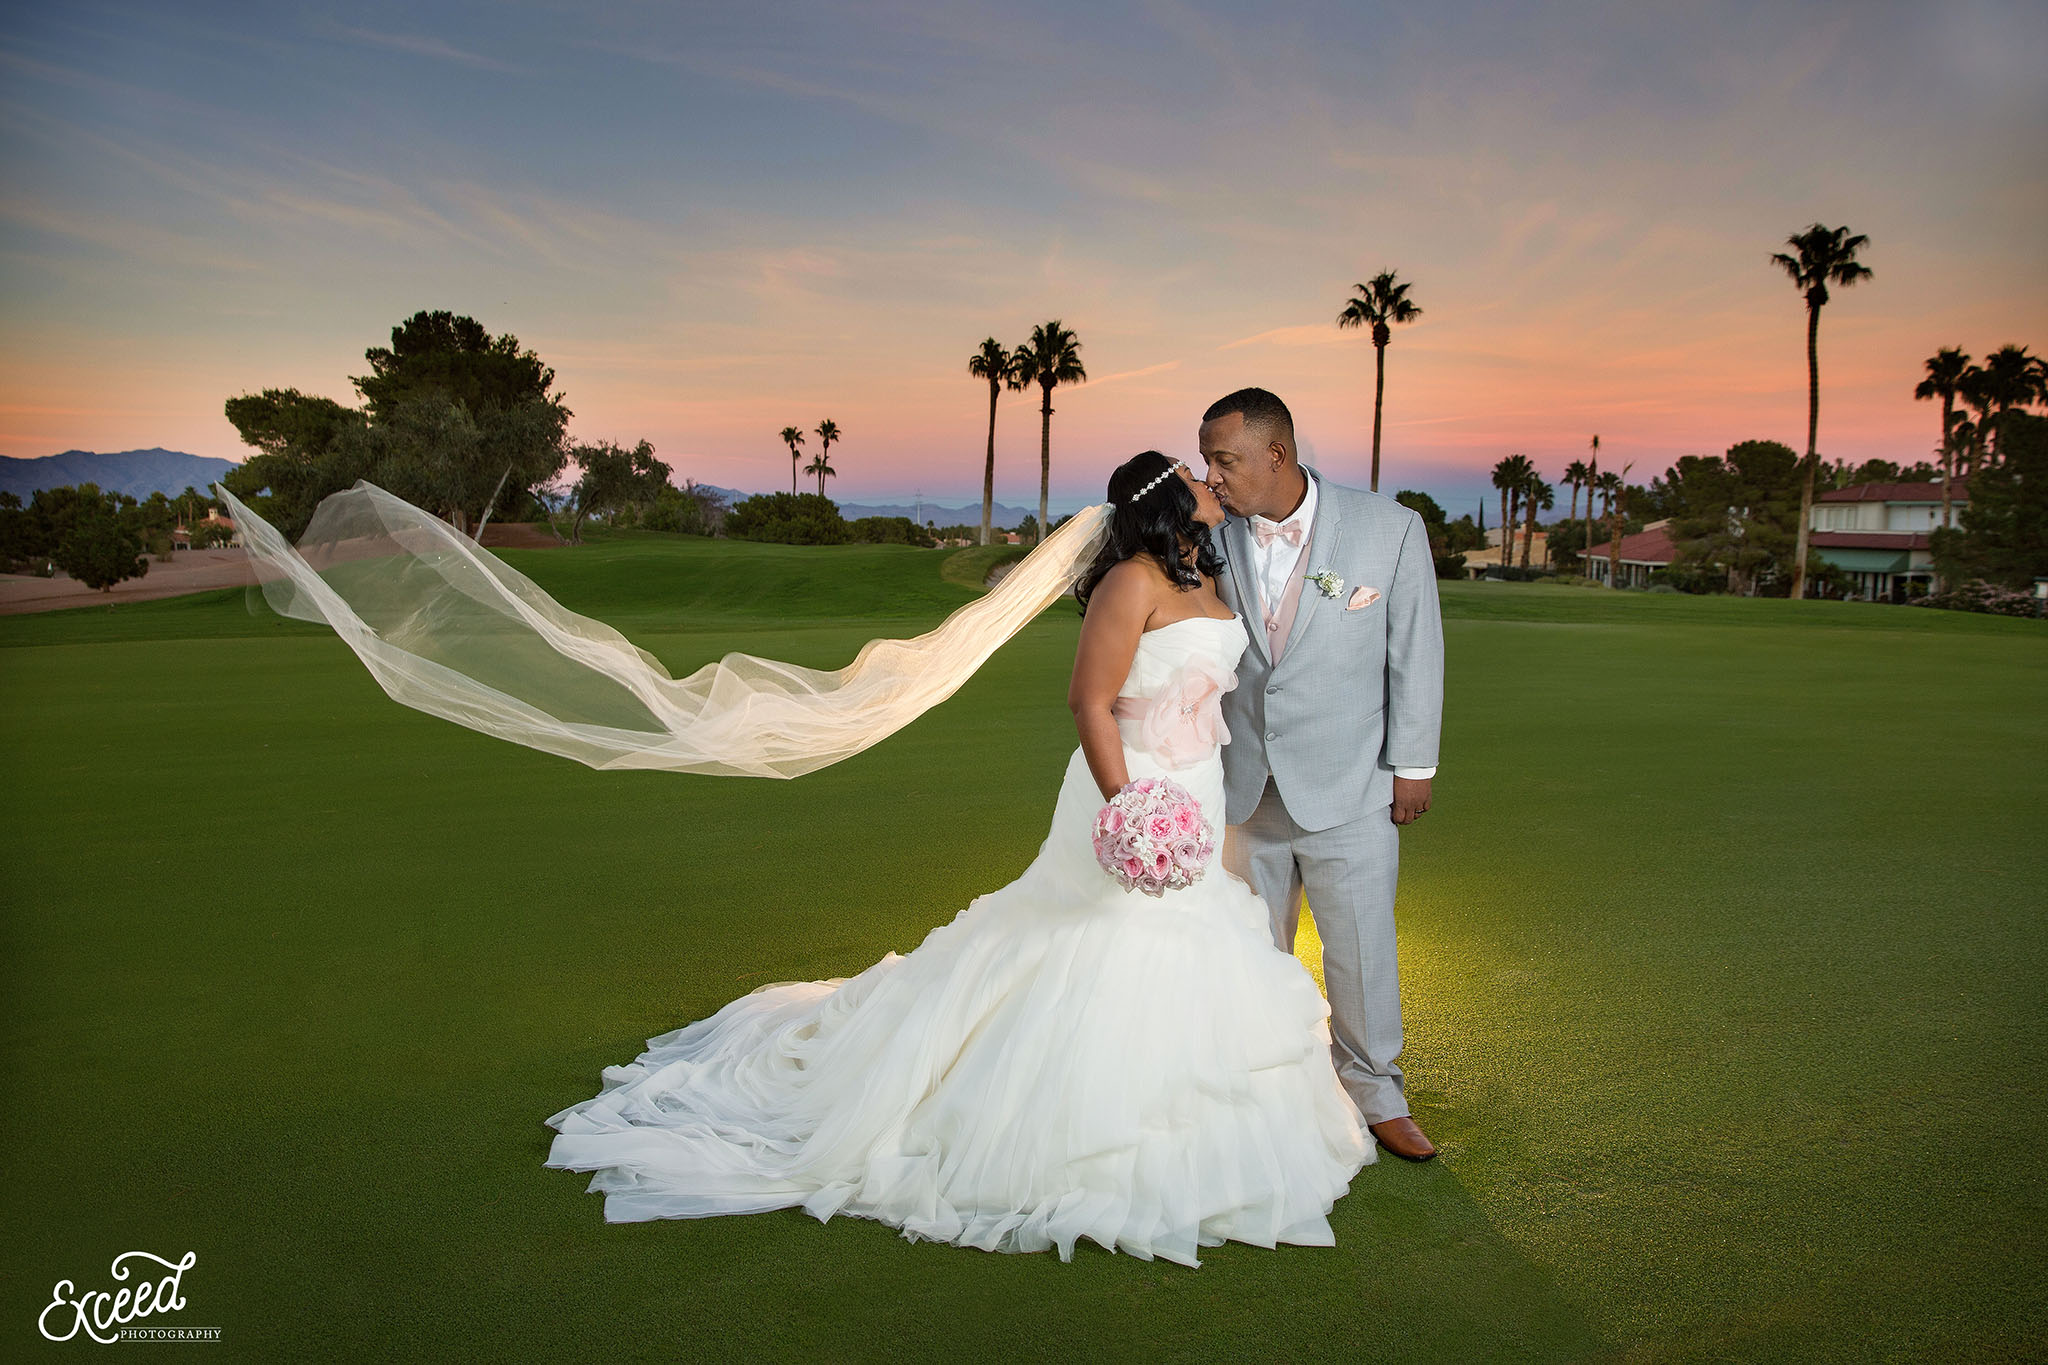 sunset at the golf course, gold course wedding photos 